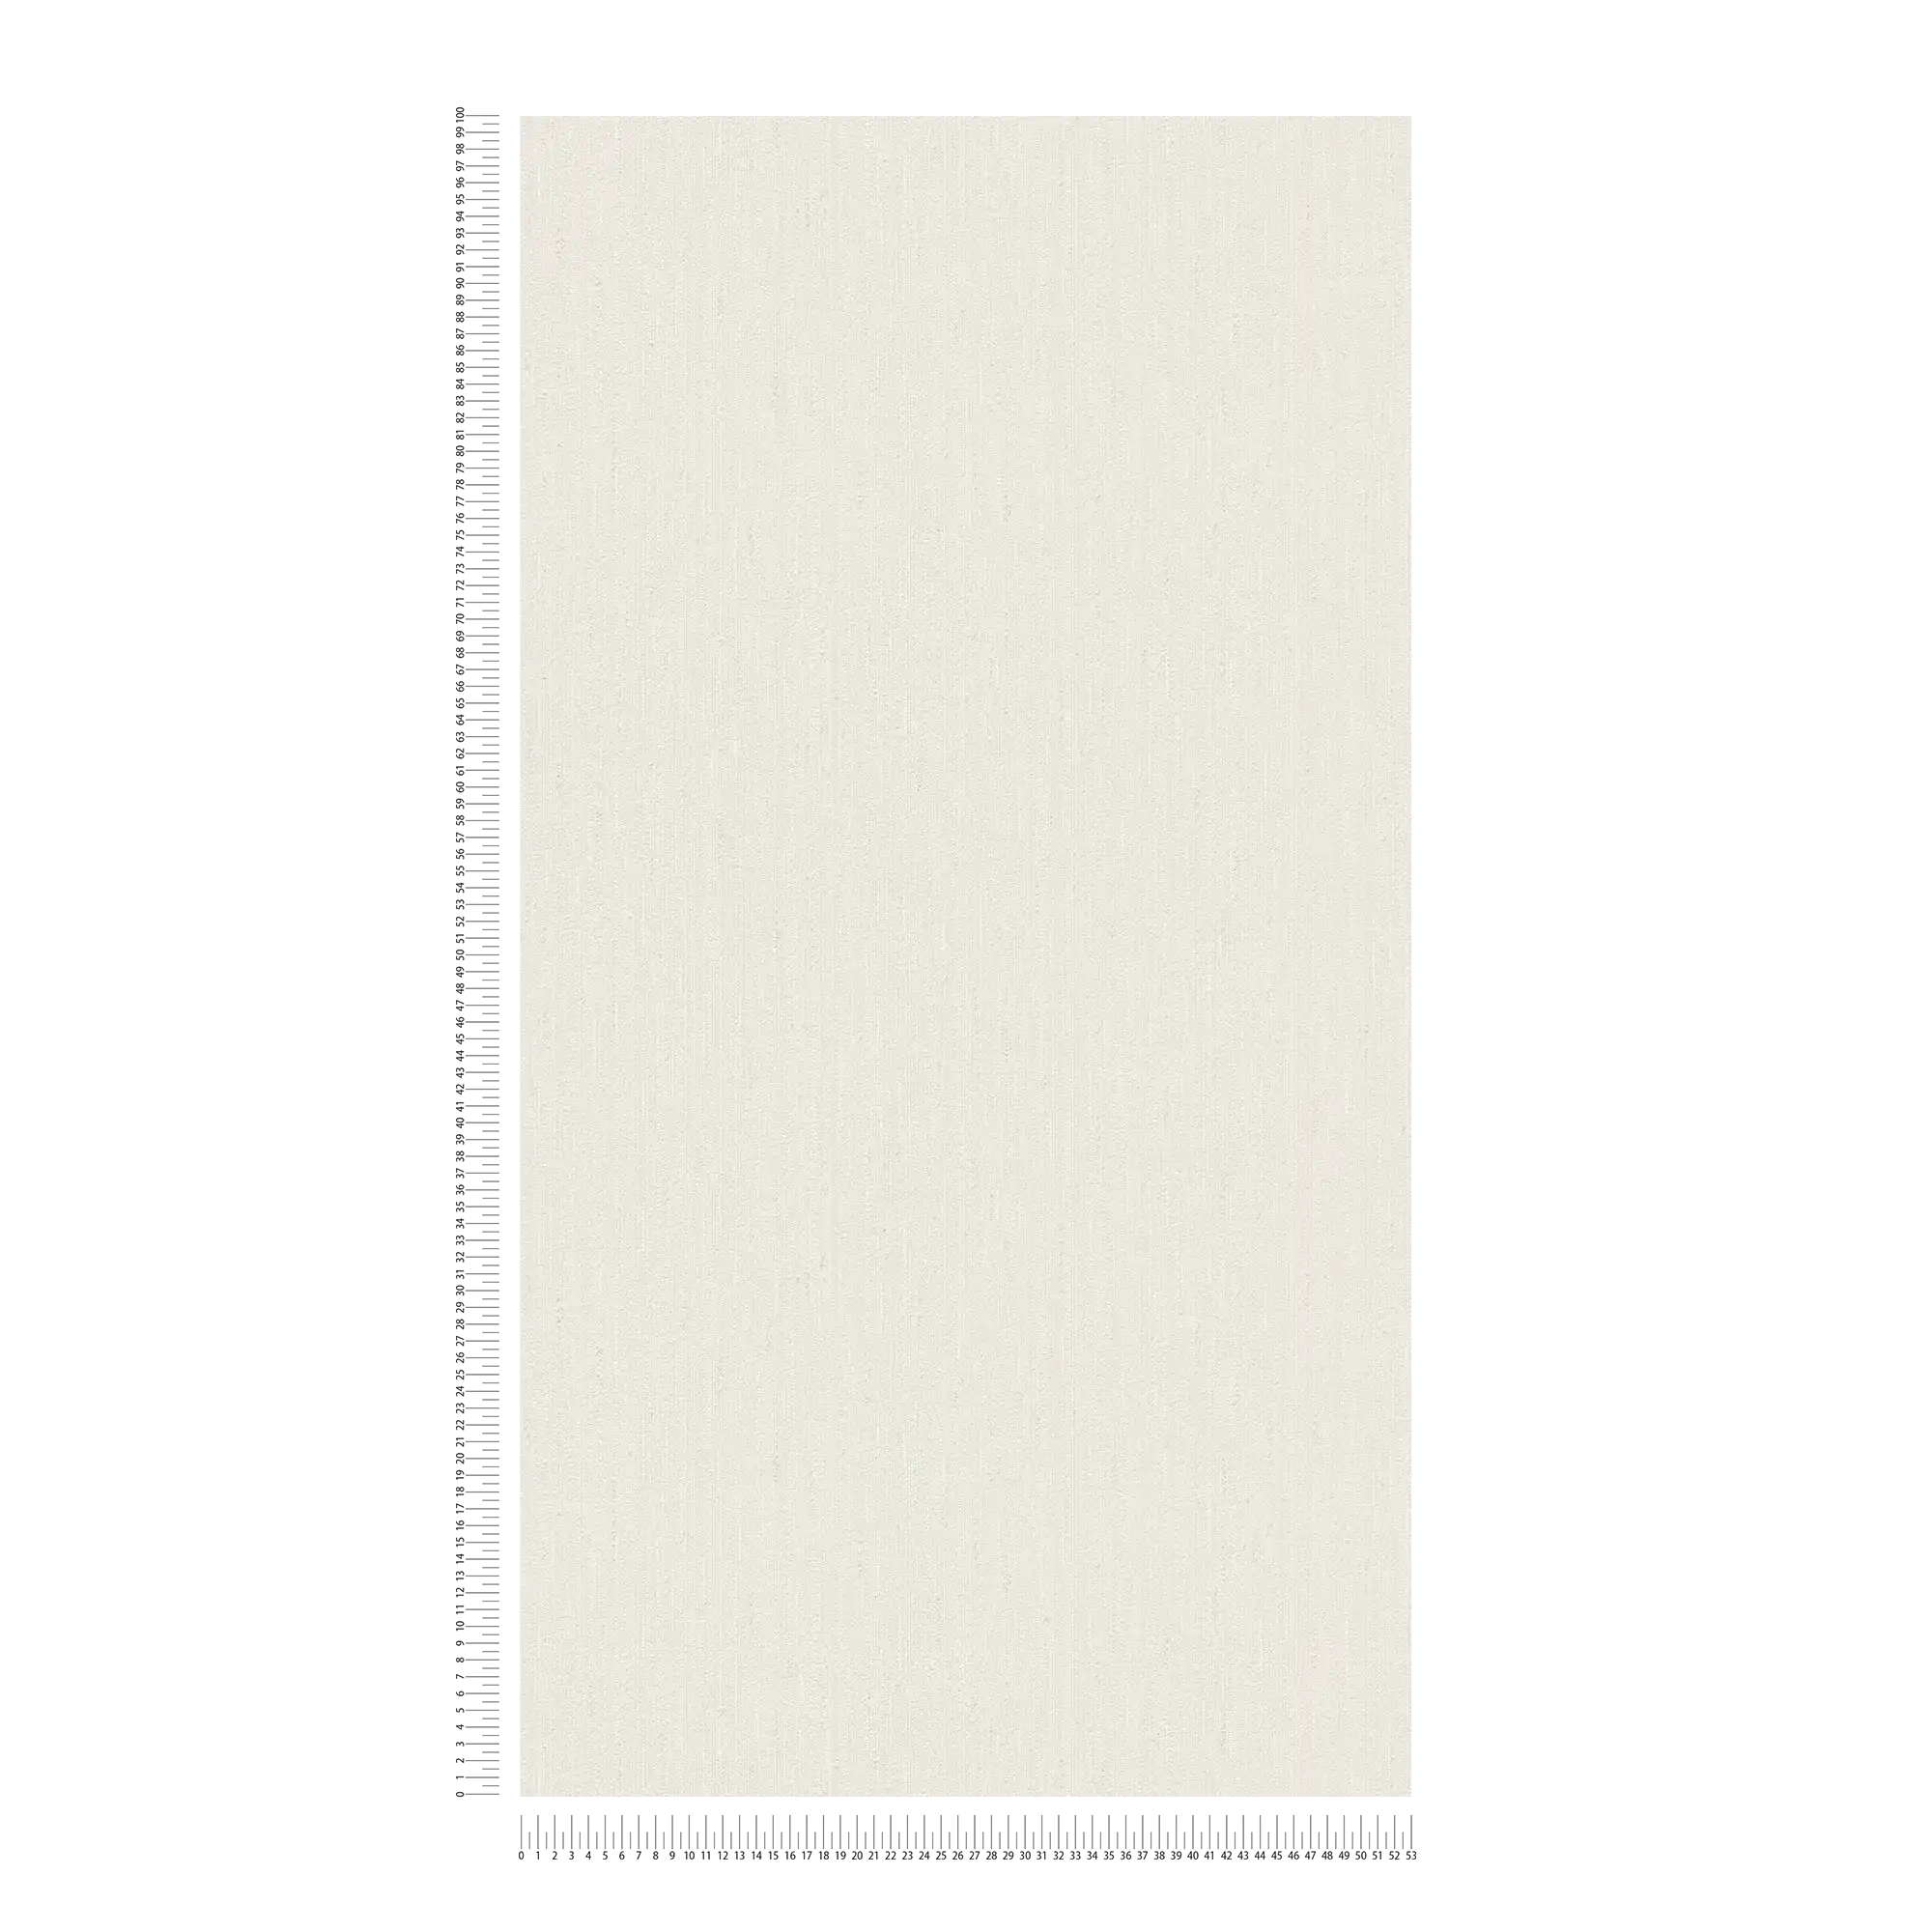             Single-coloured non-woven wallpaper with a light texture - white
        